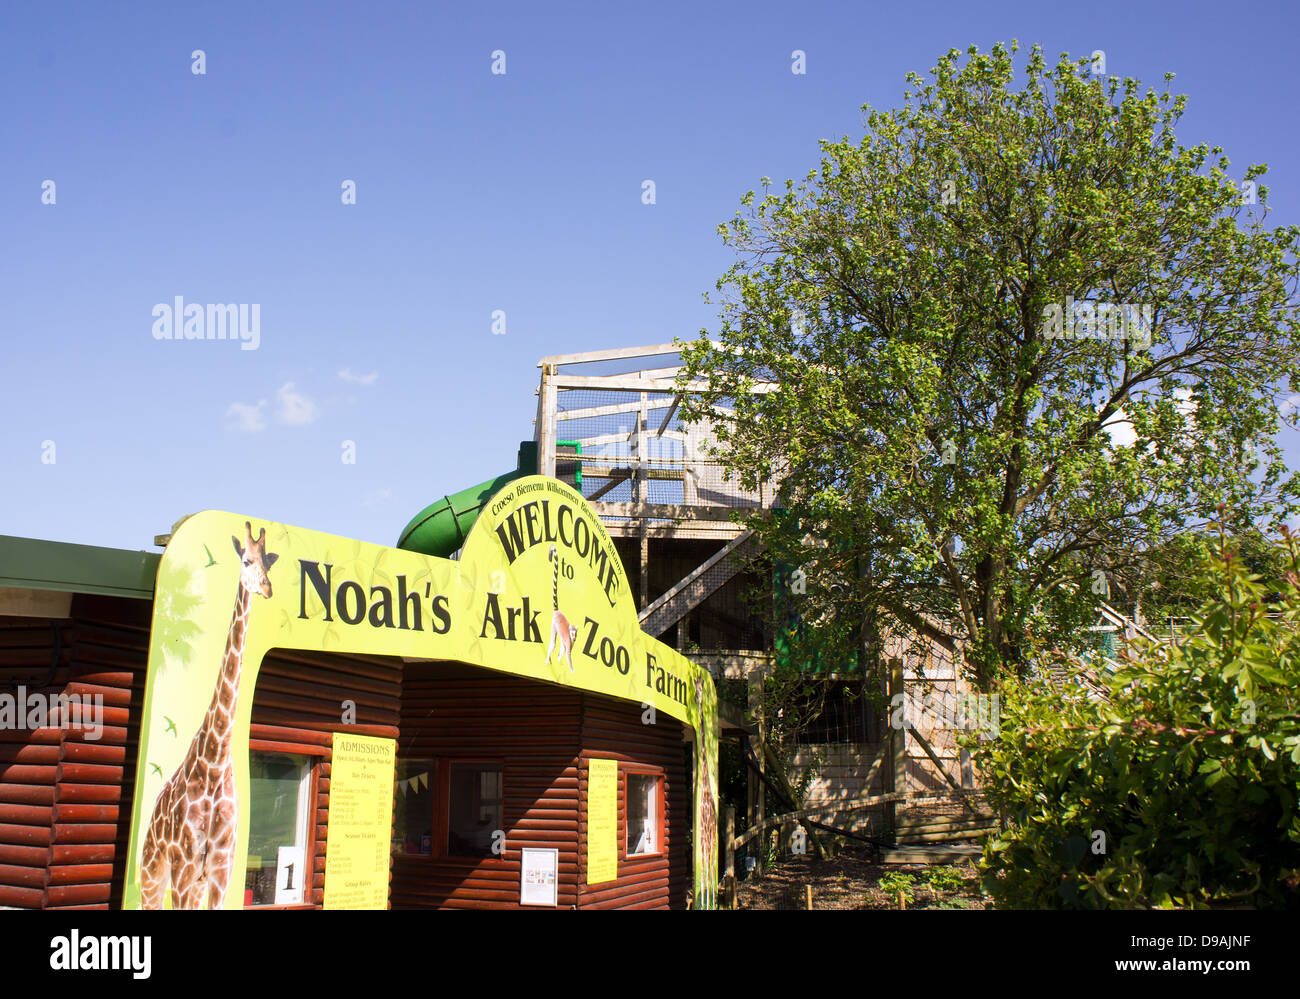 Noahs Ark Zoo Farm, Bristol, England, UK Stockfoto